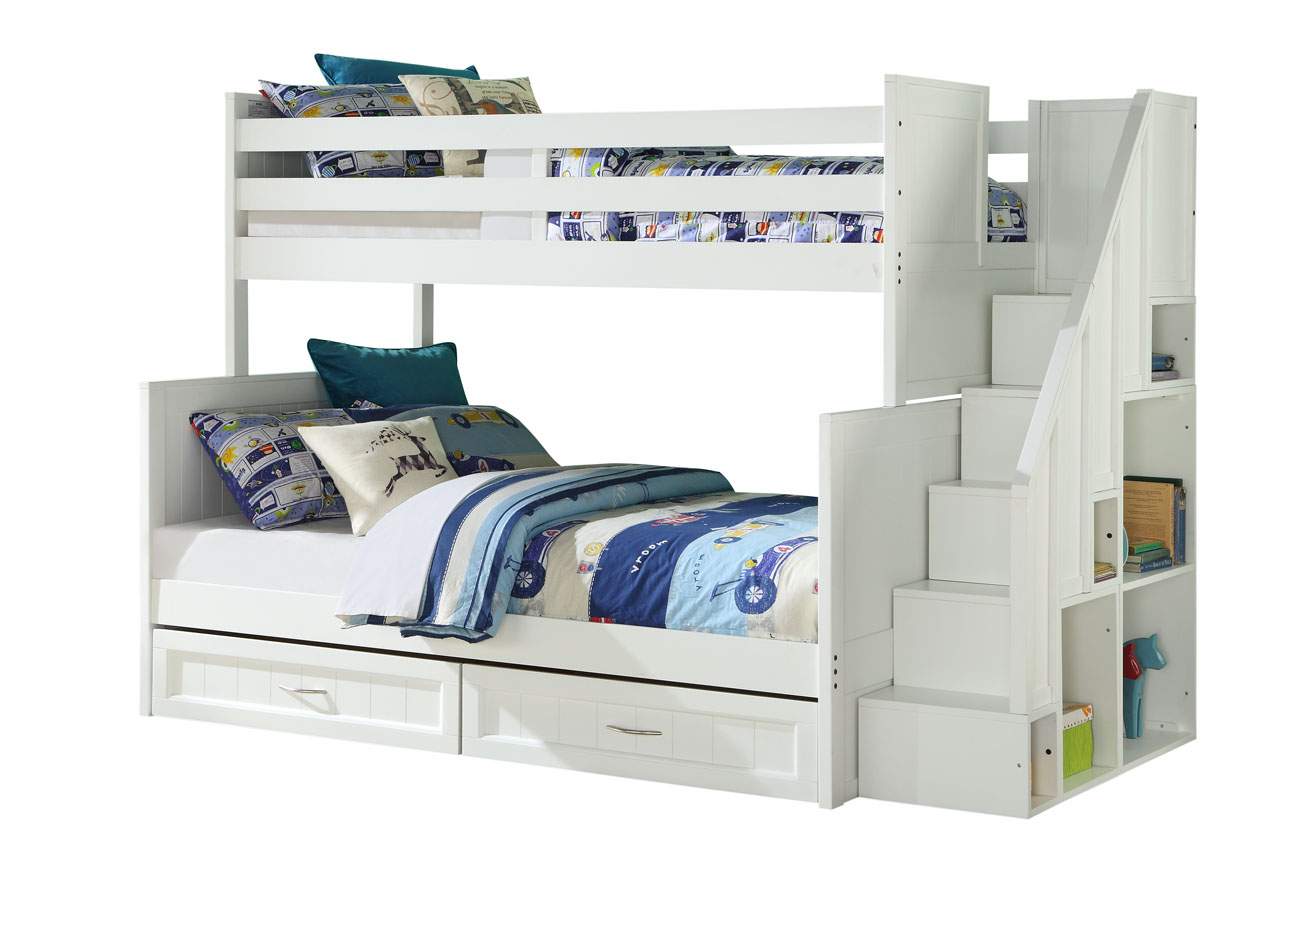 Caramia Furniture Bunk Beds, Jordan Twin Over Full Bunk Bed Assembly Instructions